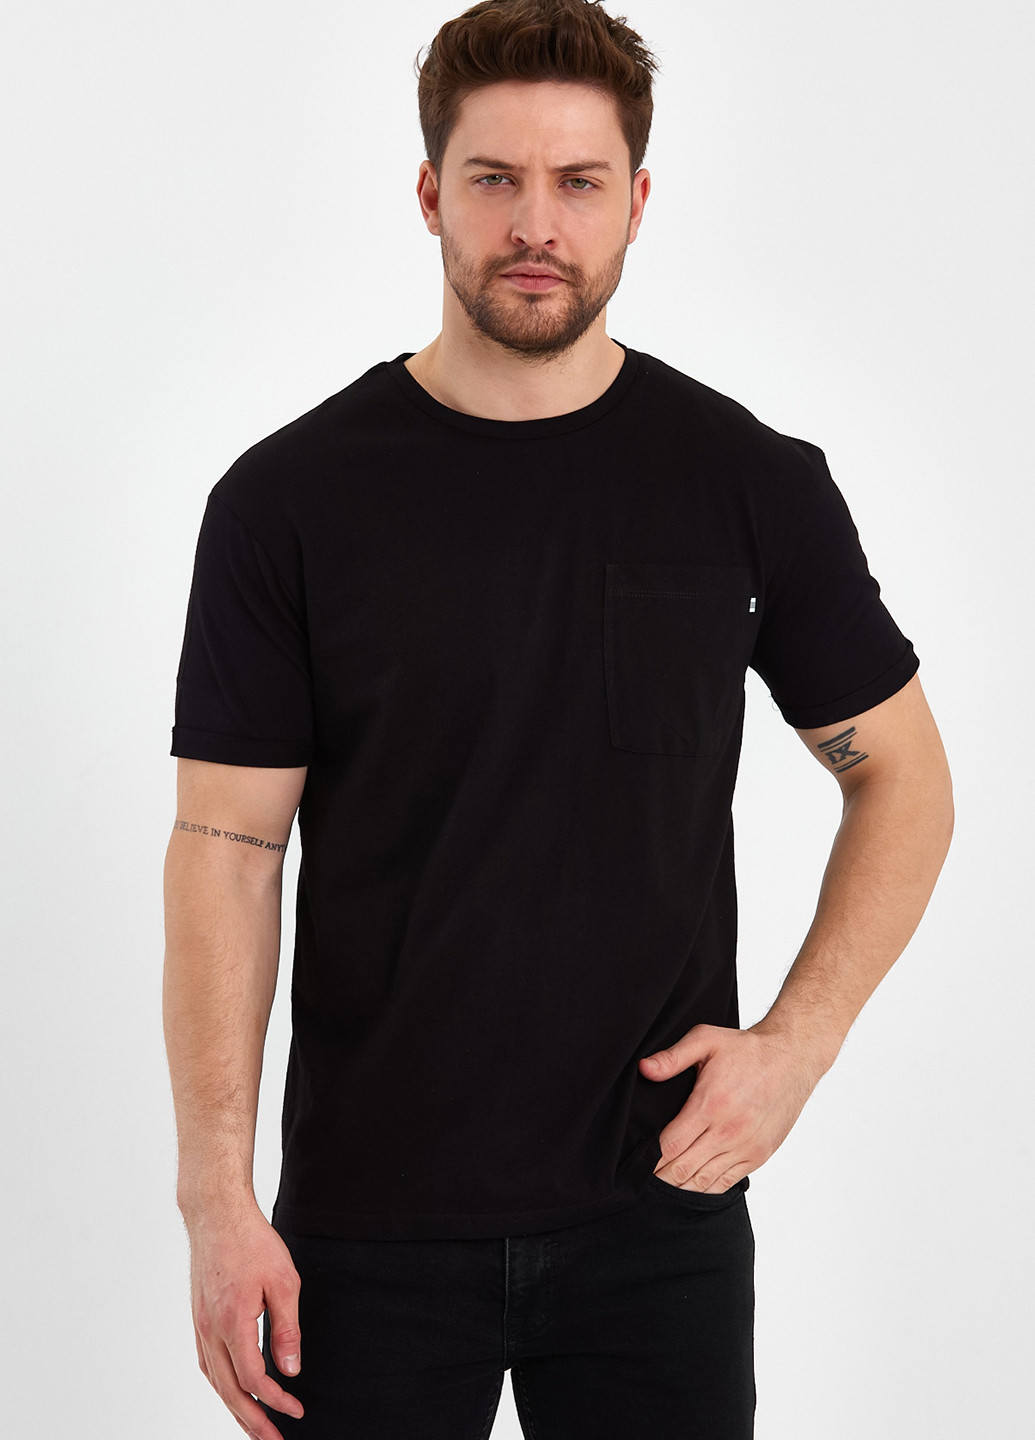 Черная футболка Trend Collection